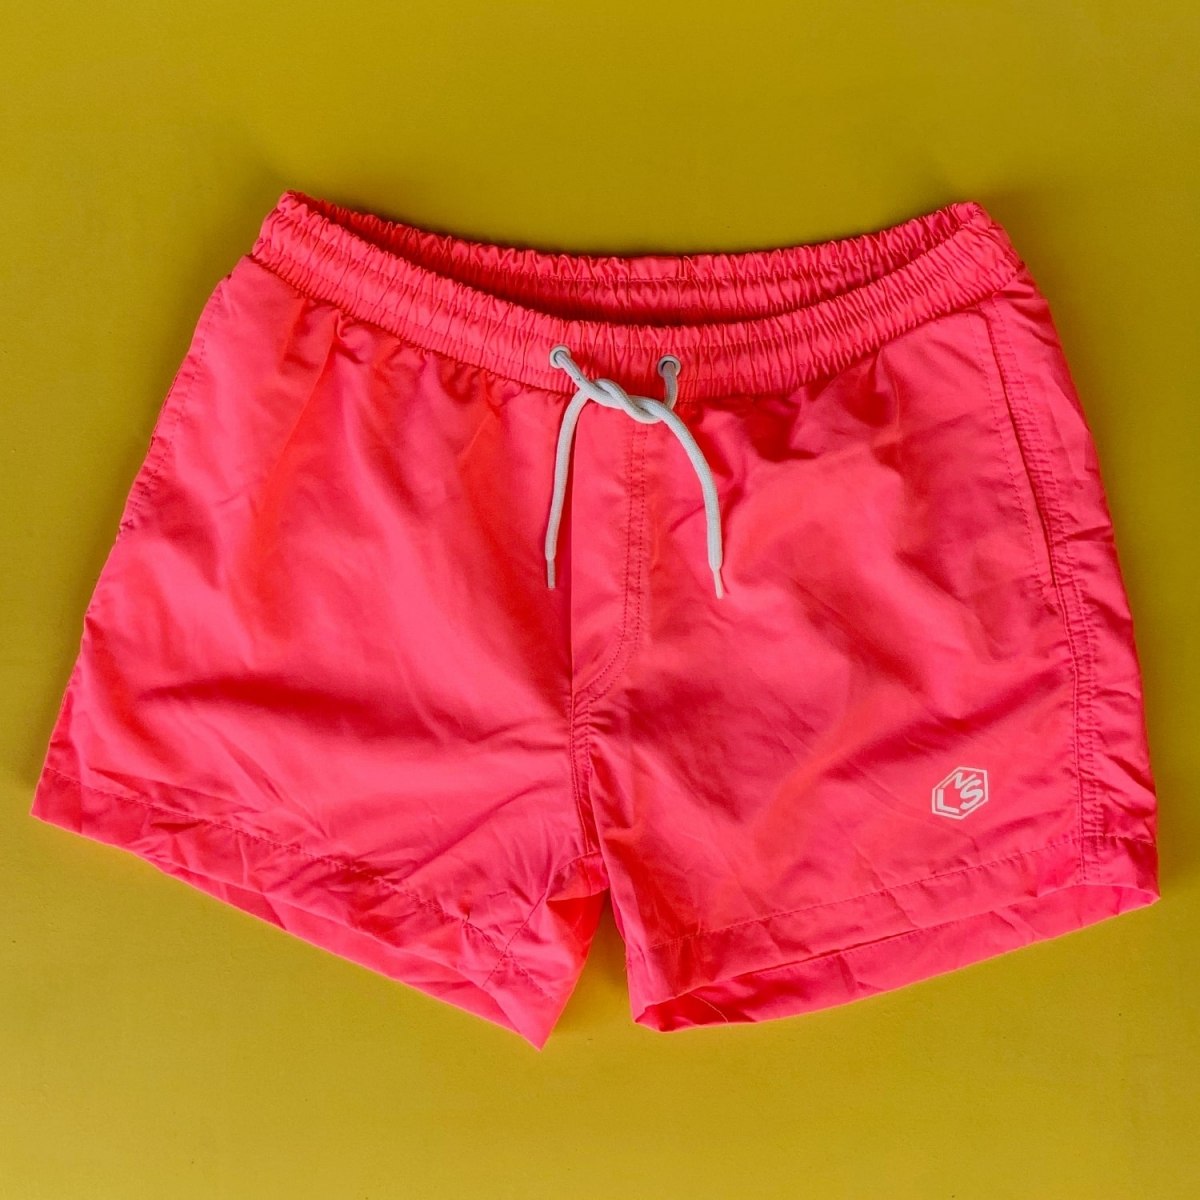 Men's Basic Short Sea Shorts With Back Pockets Pink